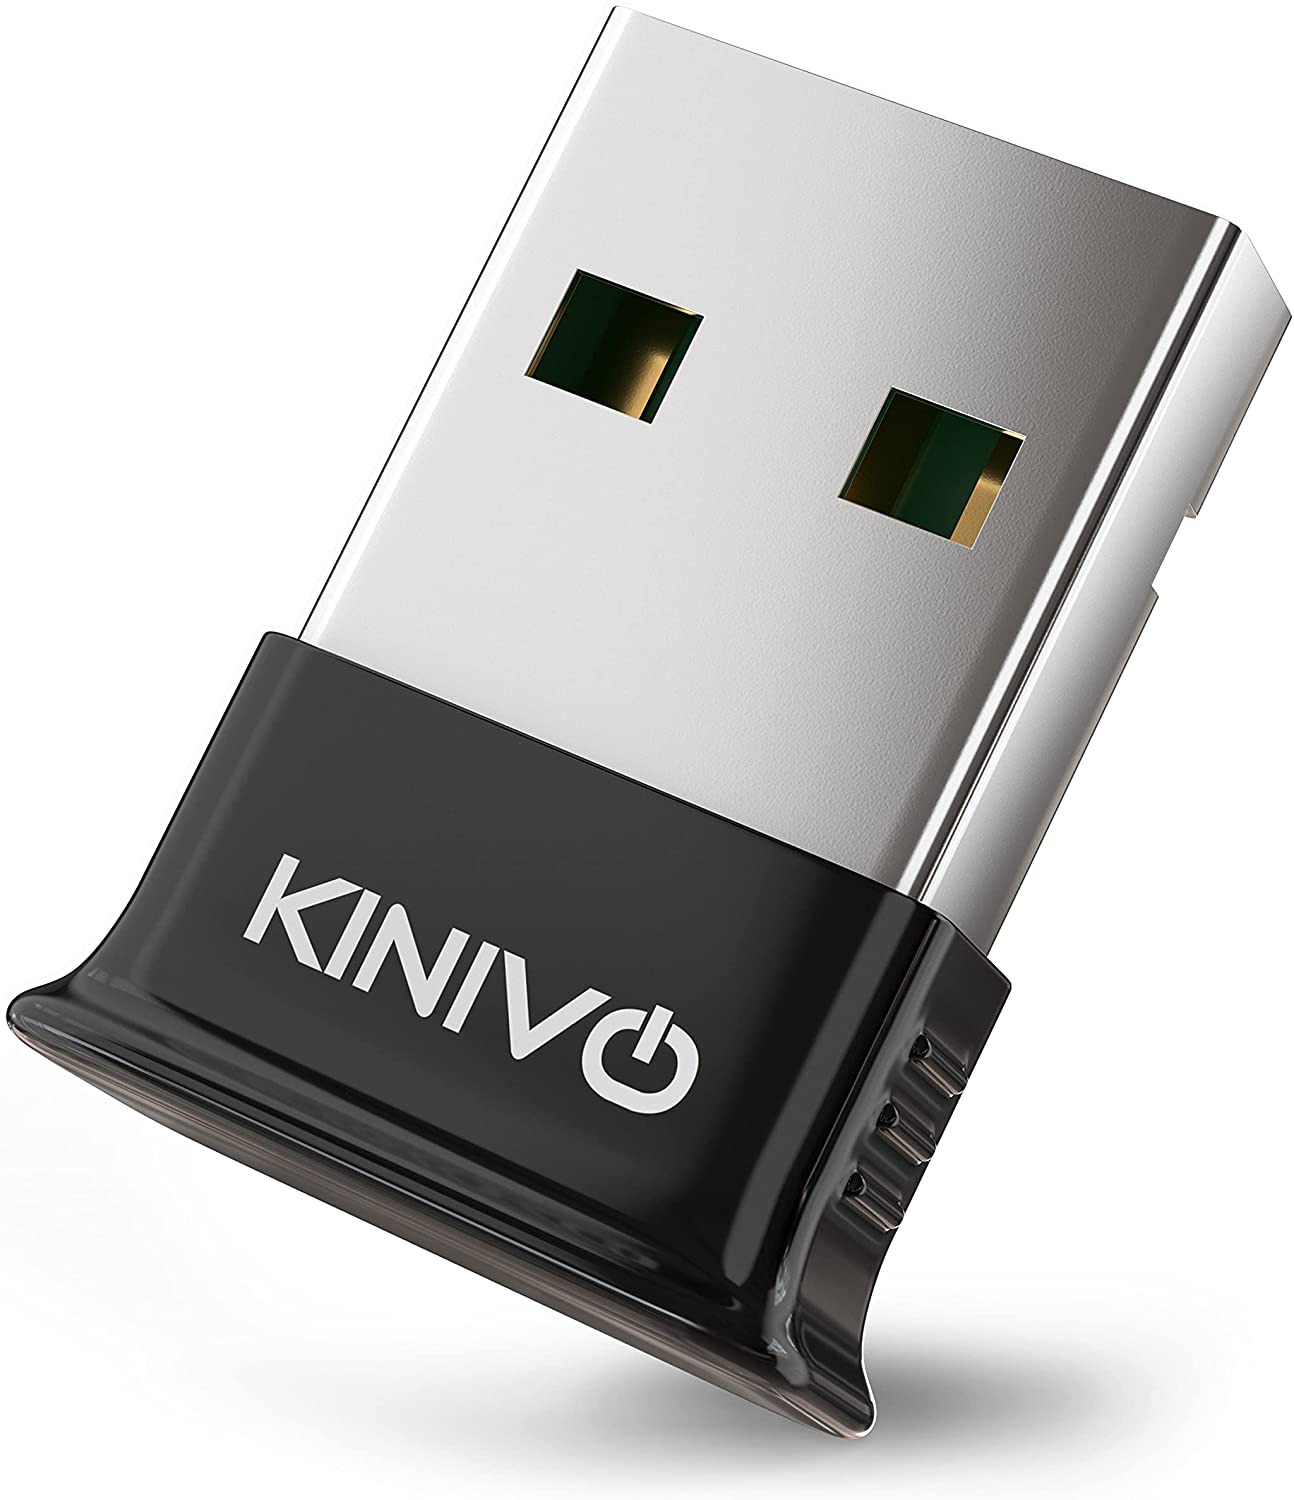 Kinivo Btd-400 Bluetooth 4.0 Usb Adapter For Windows 10/8.1/8/7/Vista